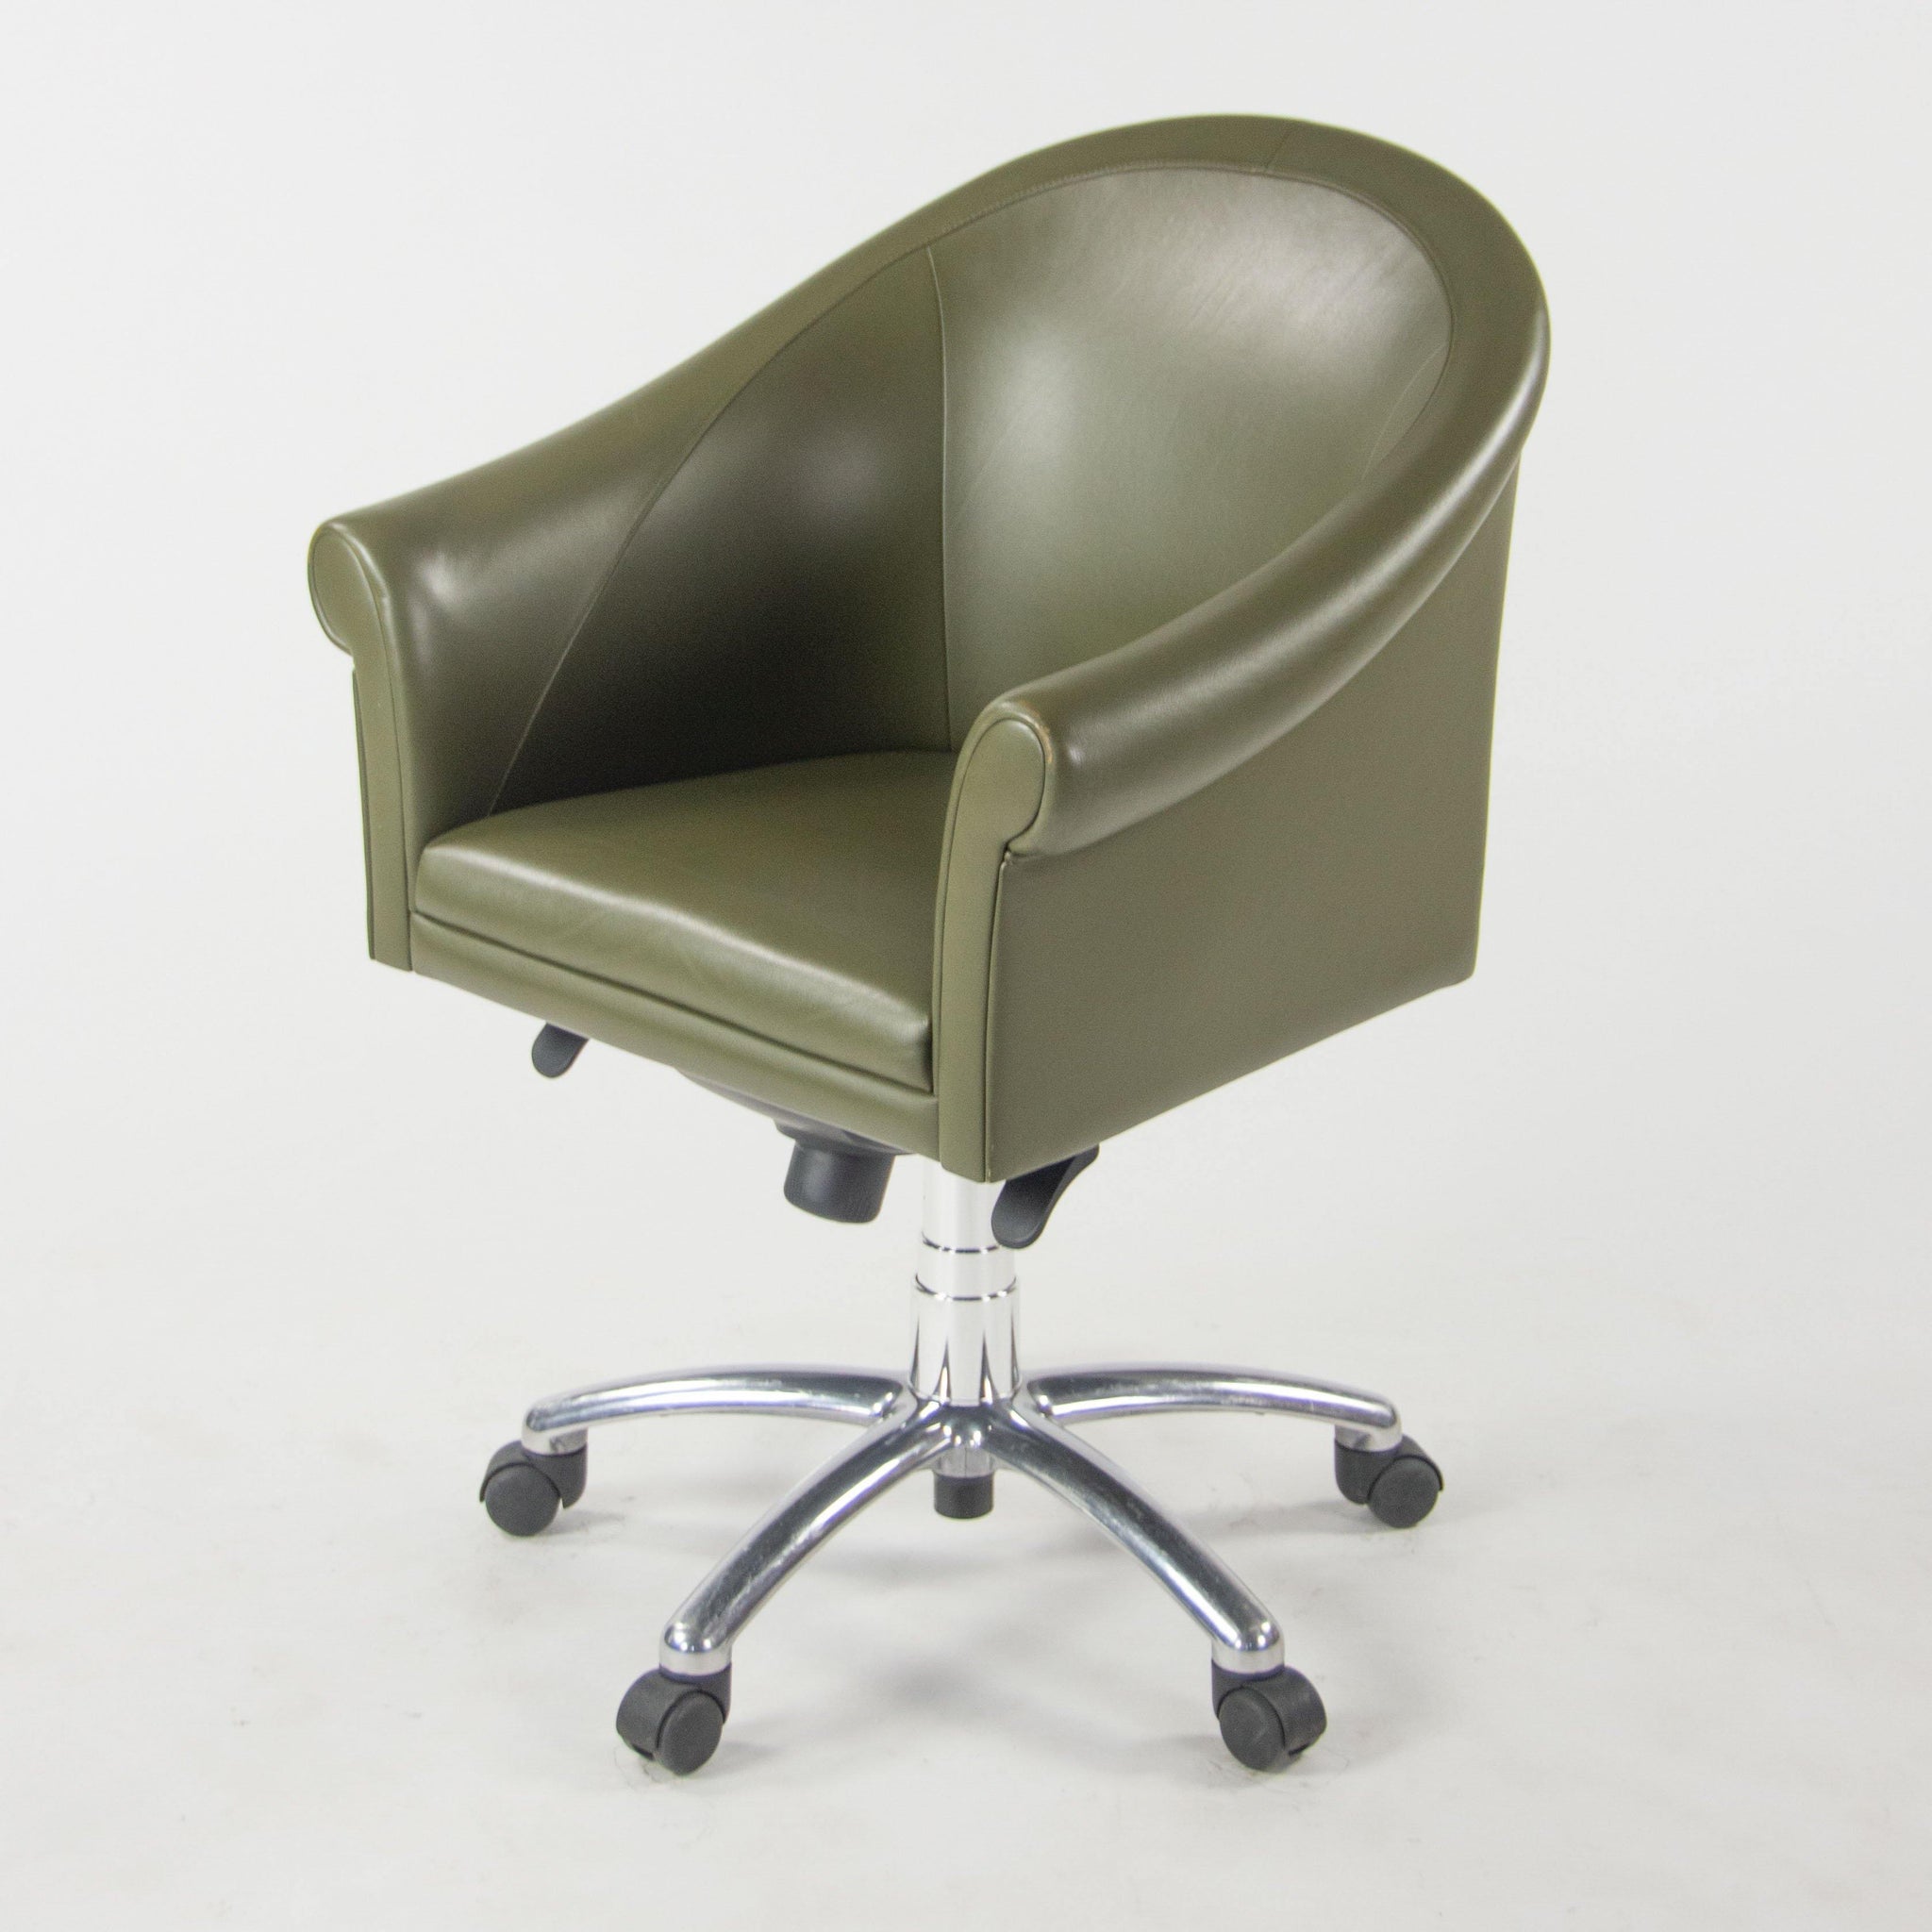 Poltrona Frau Green Leather Luca Scacchetti Sinan Office Desk Chair Multiples Available - Rarify Inc.